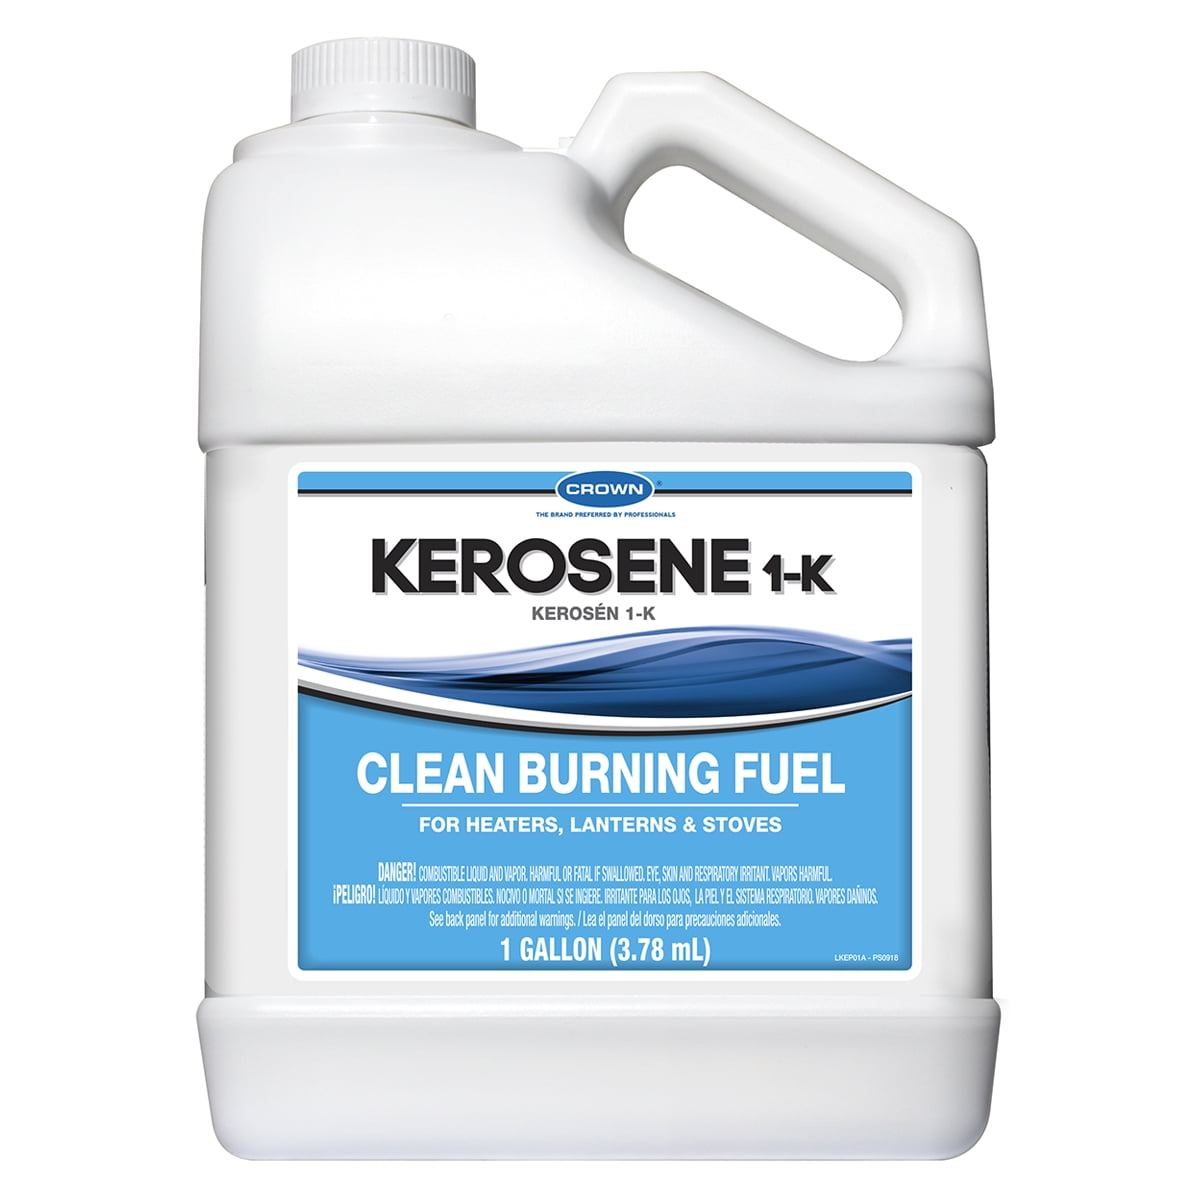 Crown 1-K Kerosene, Clean Burning Fuel, 1 Gallon 